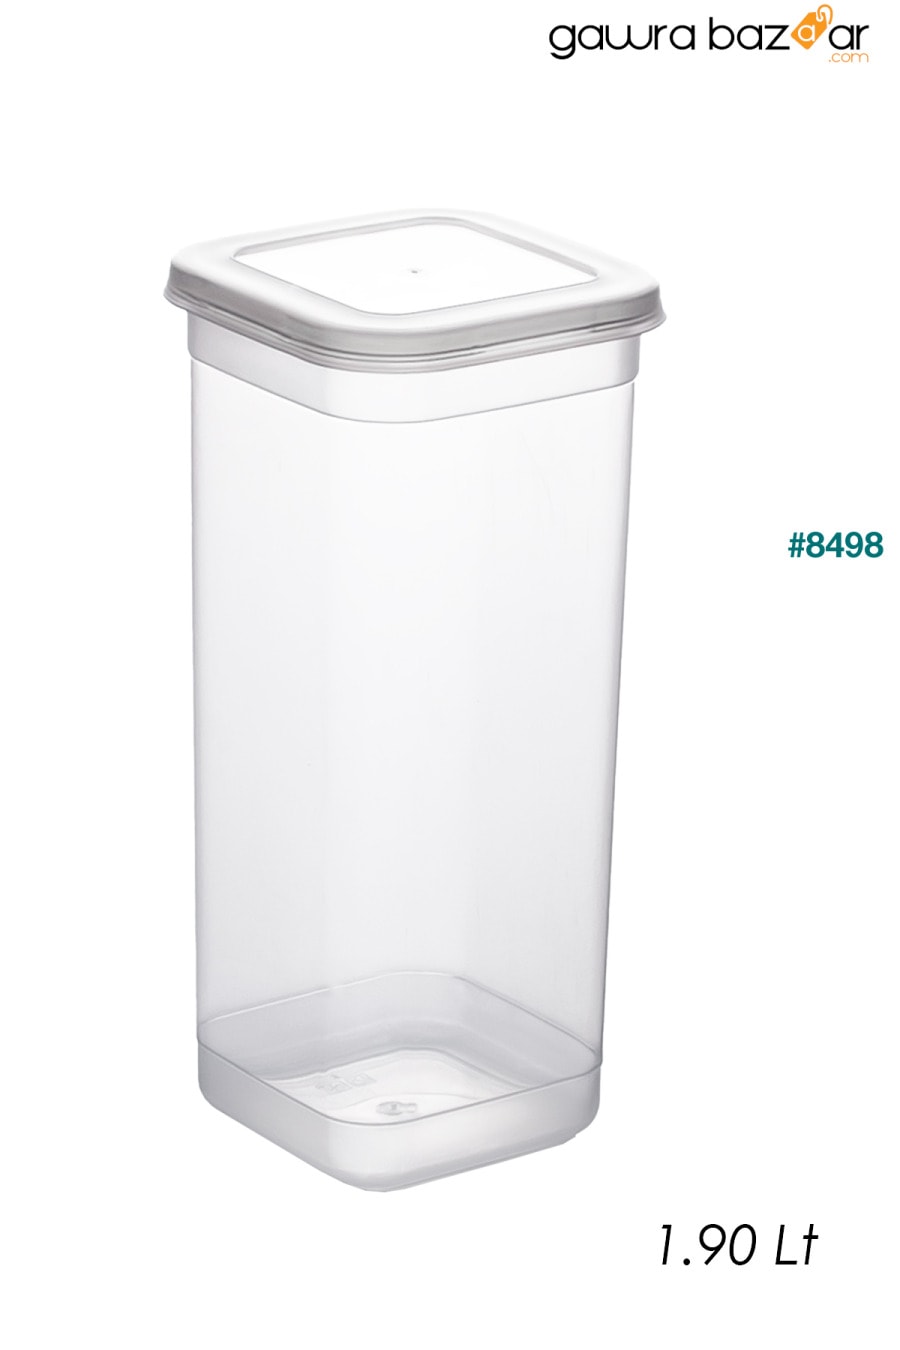 Org-432 ملصق 12 حجم كبير - حاوية تخزين النبضات - مجموعة حاويات تخزين الطعام شفافة 1900 مل Porsima 2